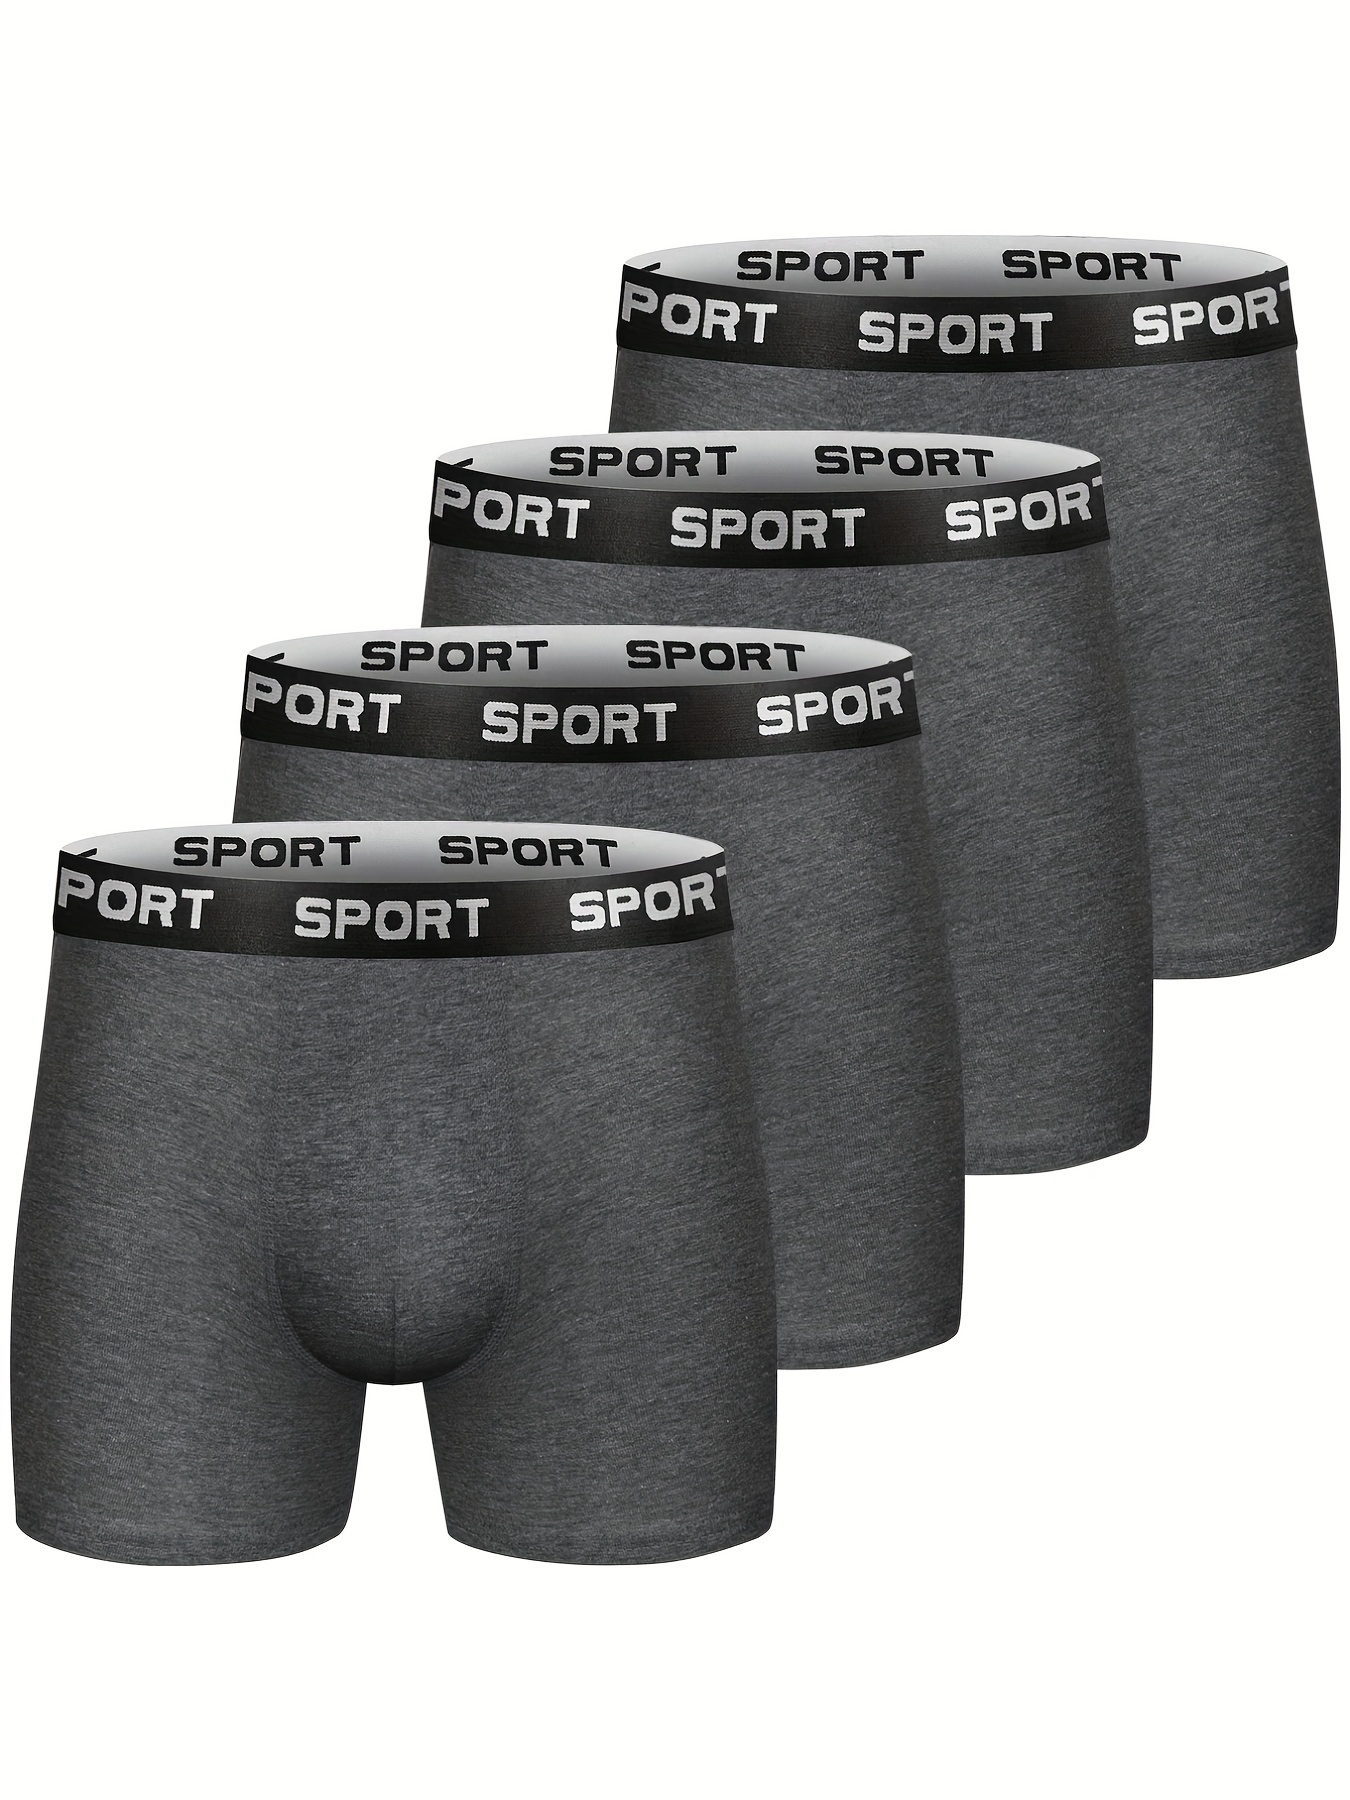 Breathable Knickers Cotton Underpants Comfortable Soft Men's Boxer